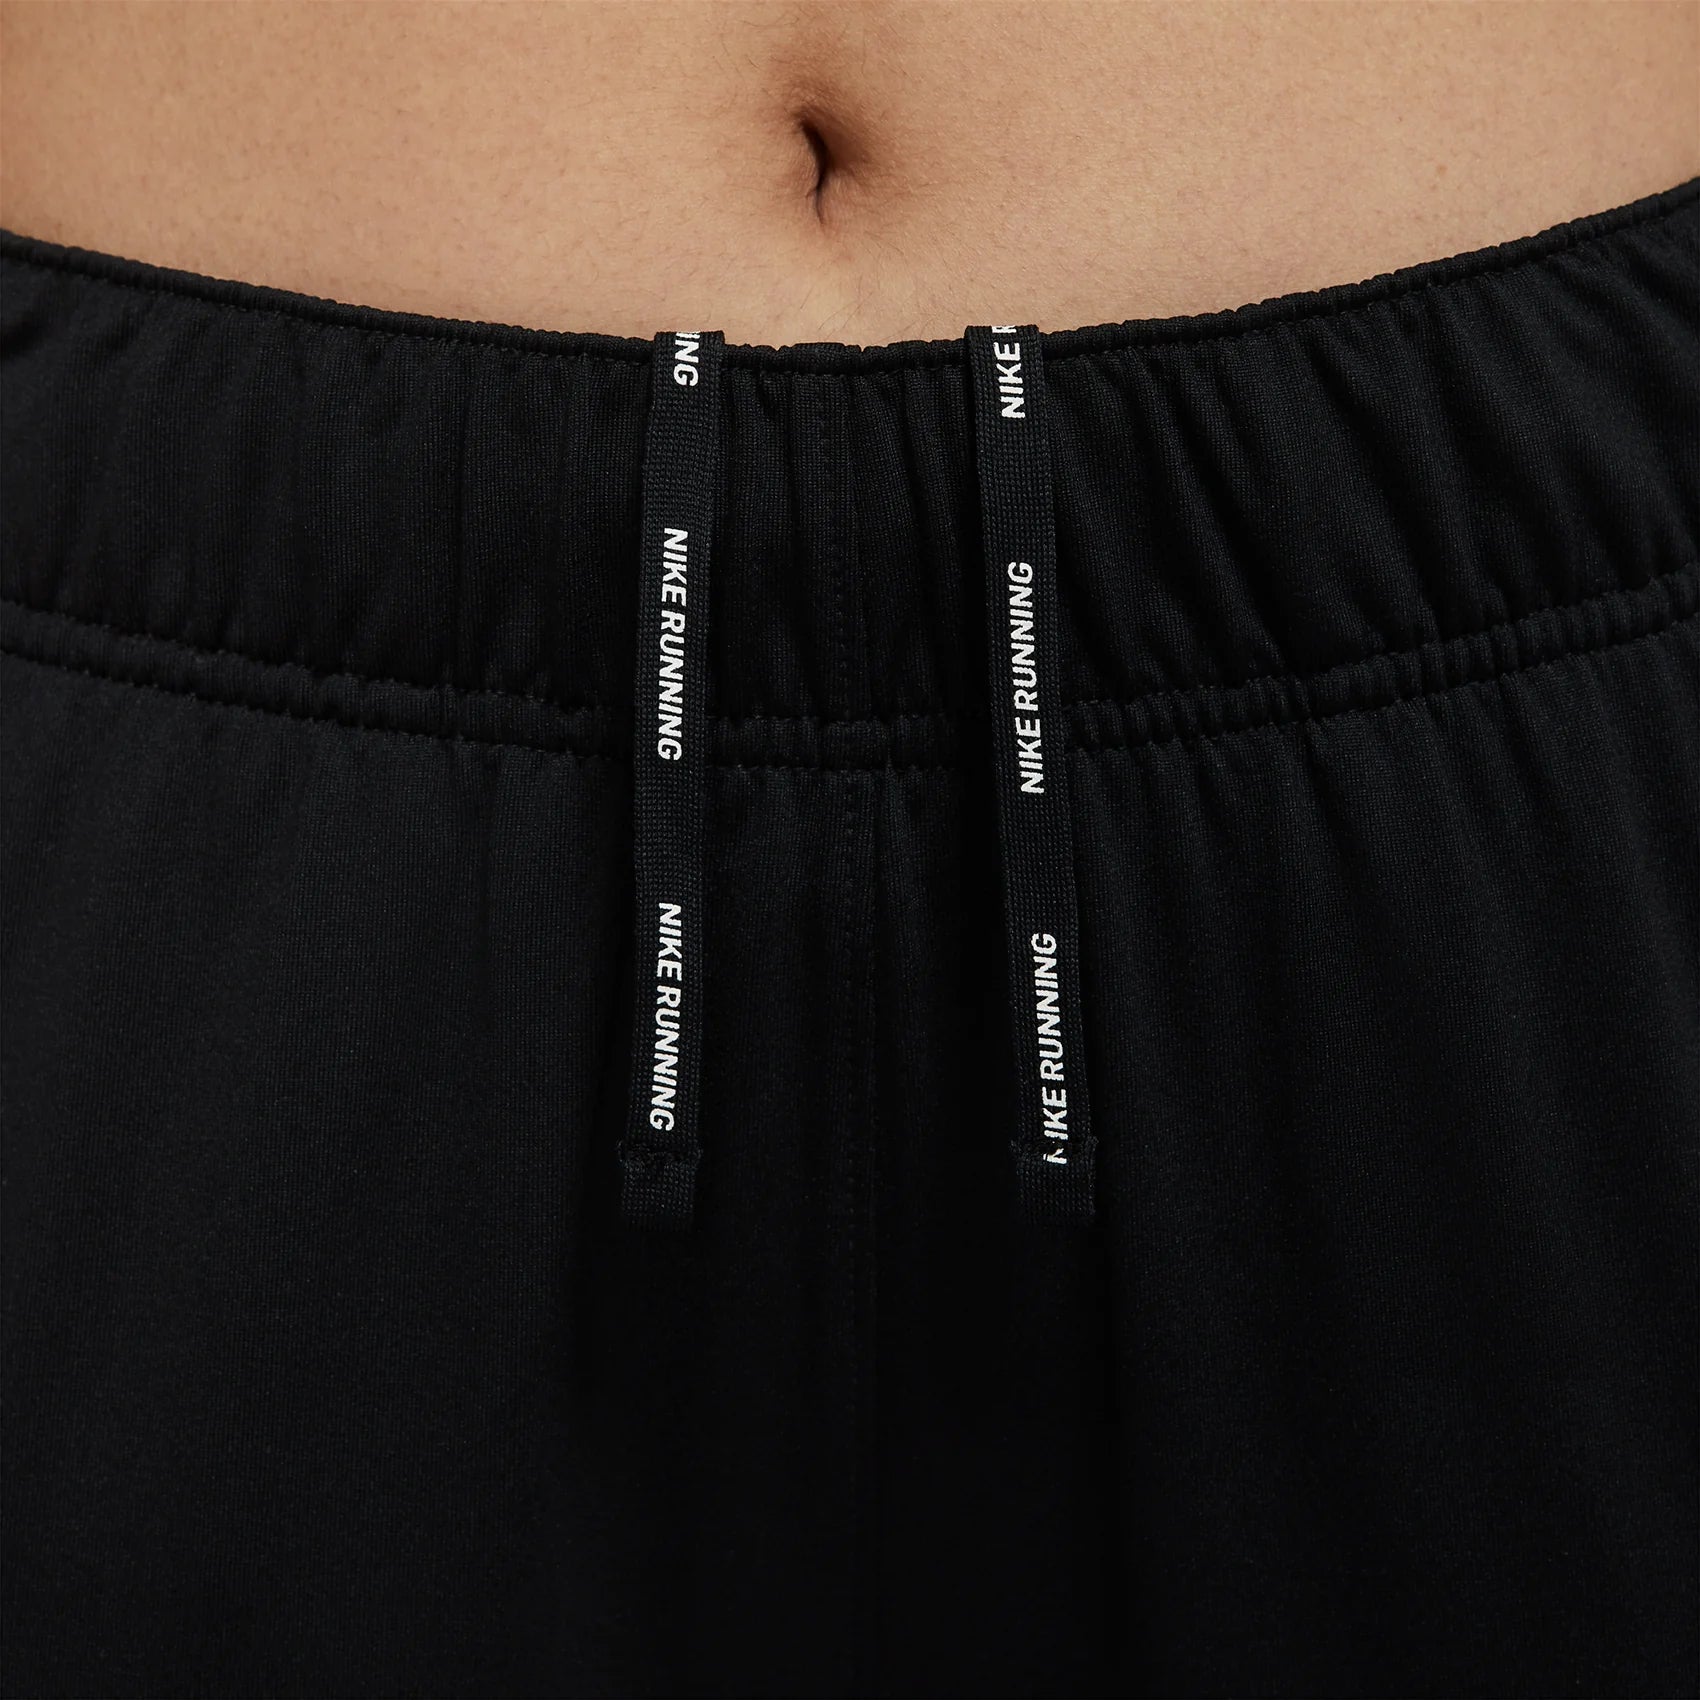 Nike Dri Fit All Time Tech Pants Black Pockets 747973-012 Womens